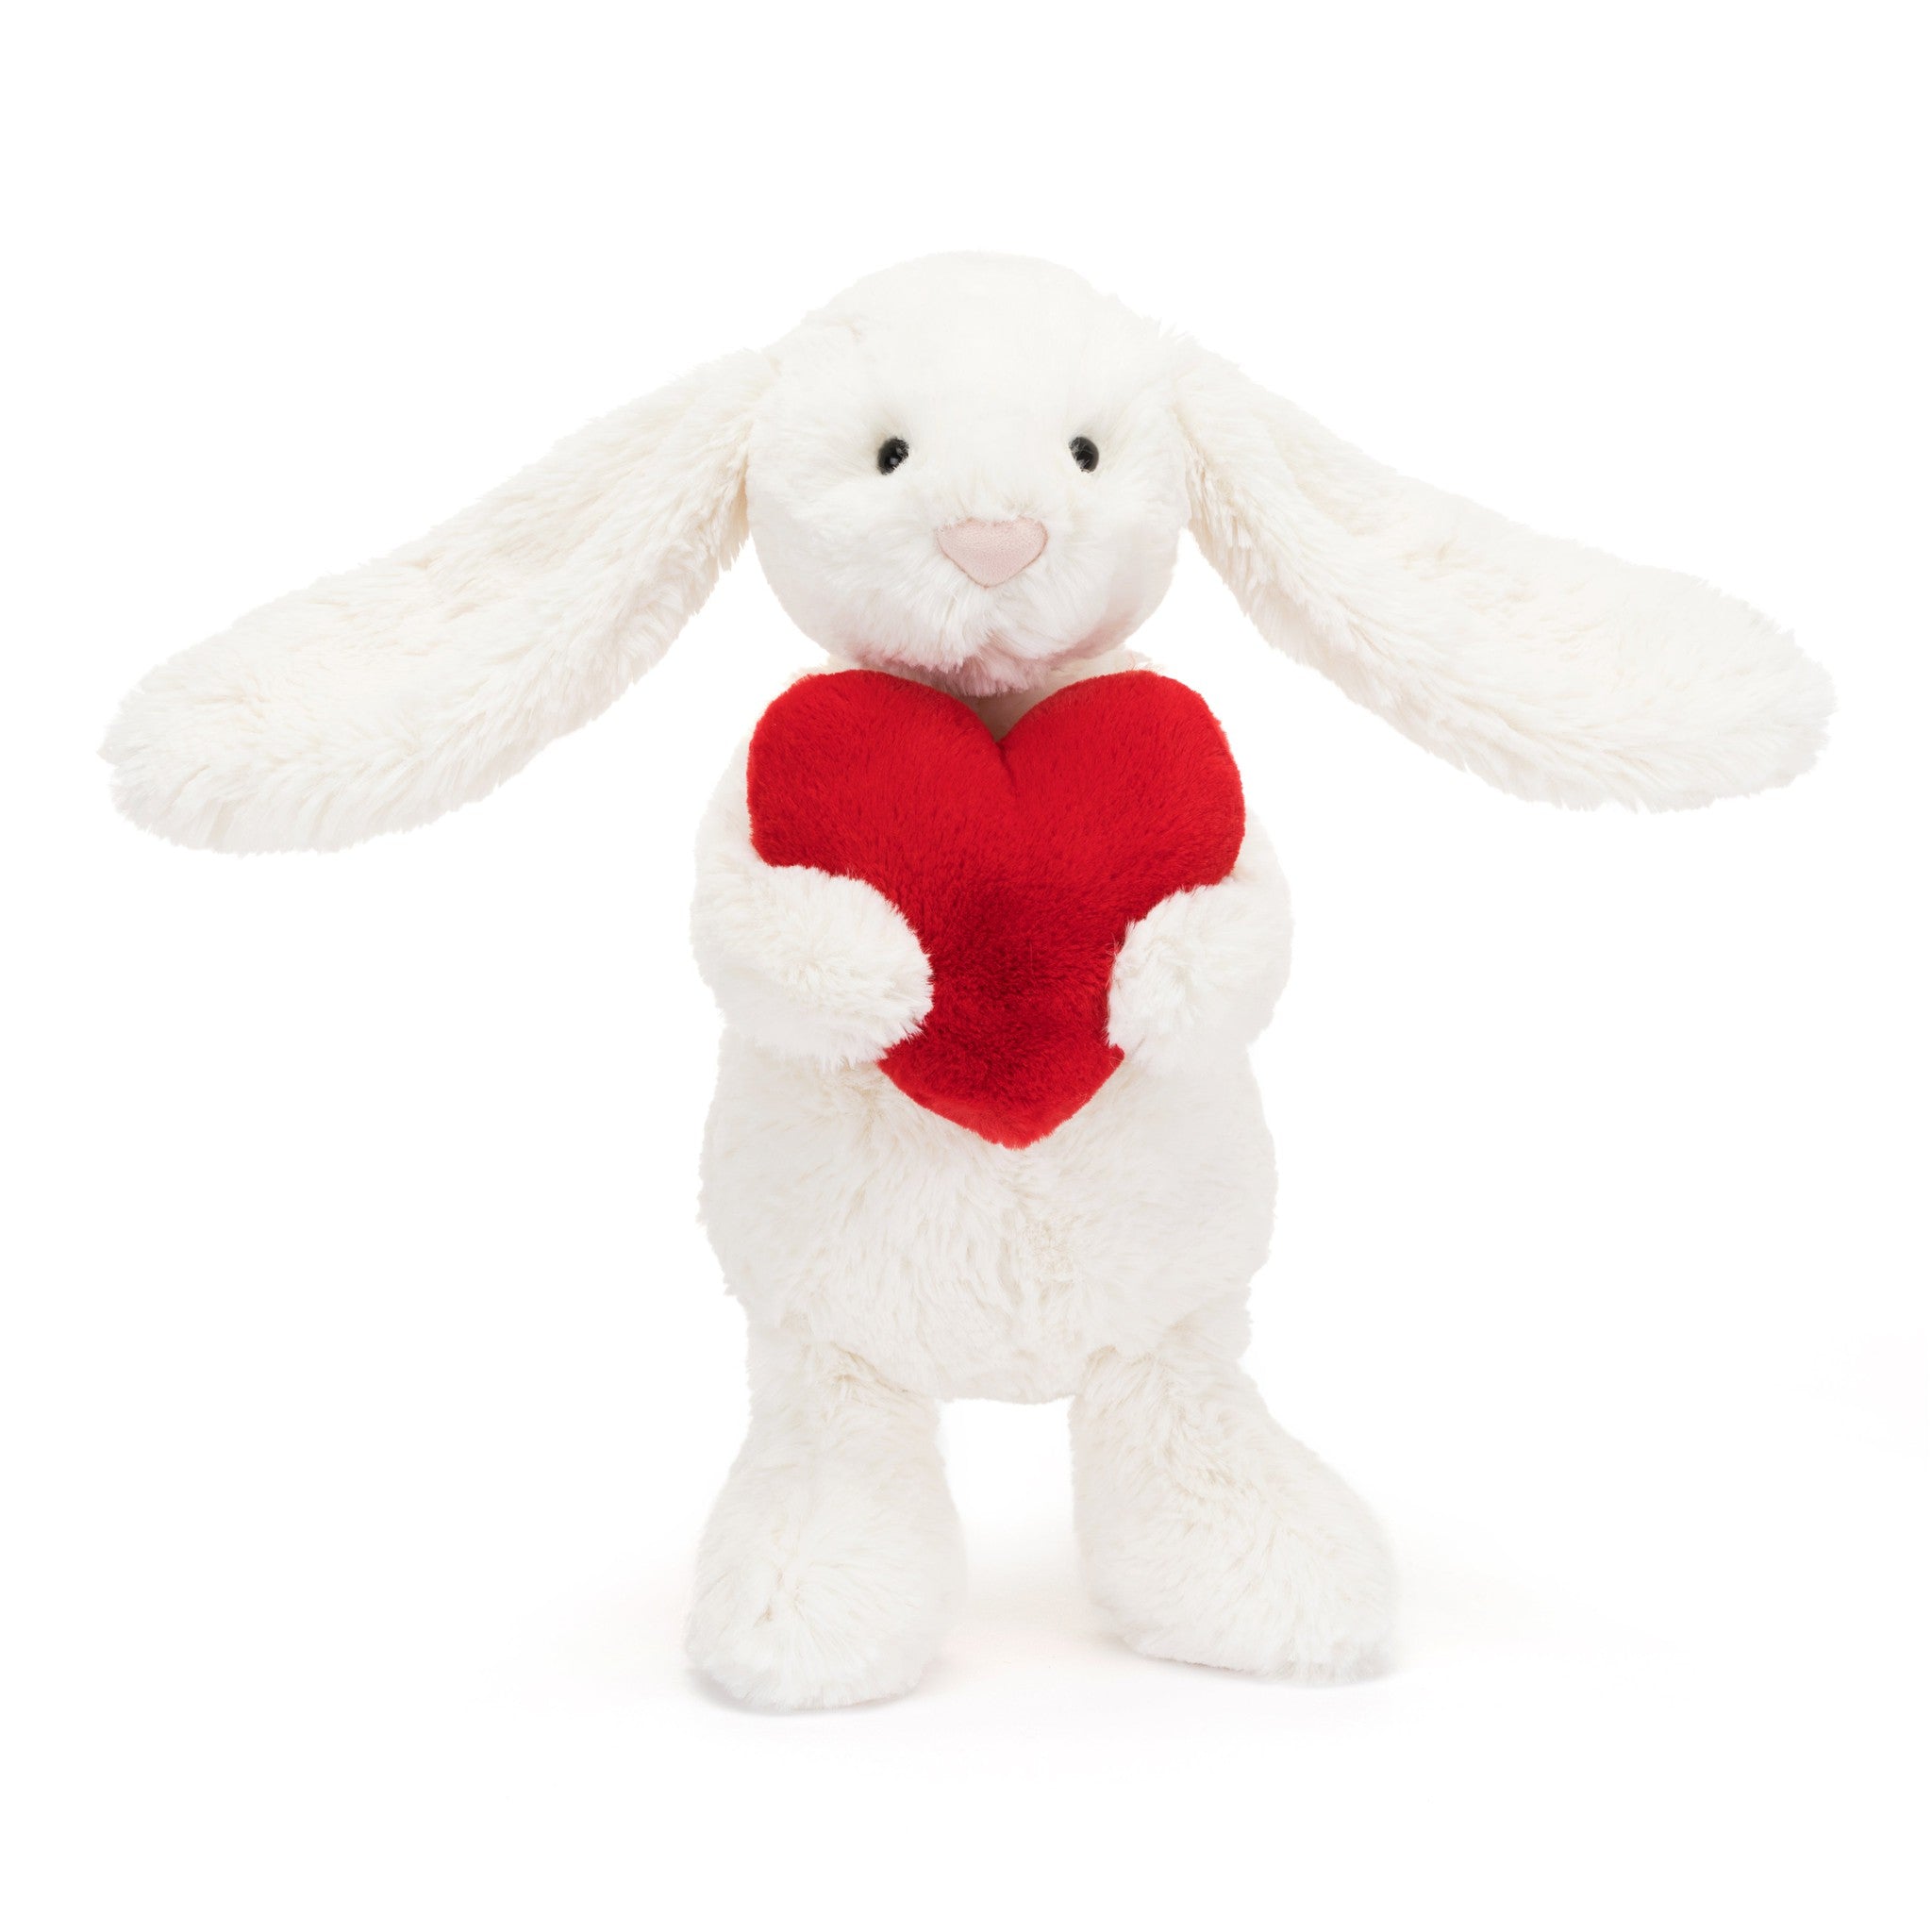 Bashful Red Love Heart Bunny - Little